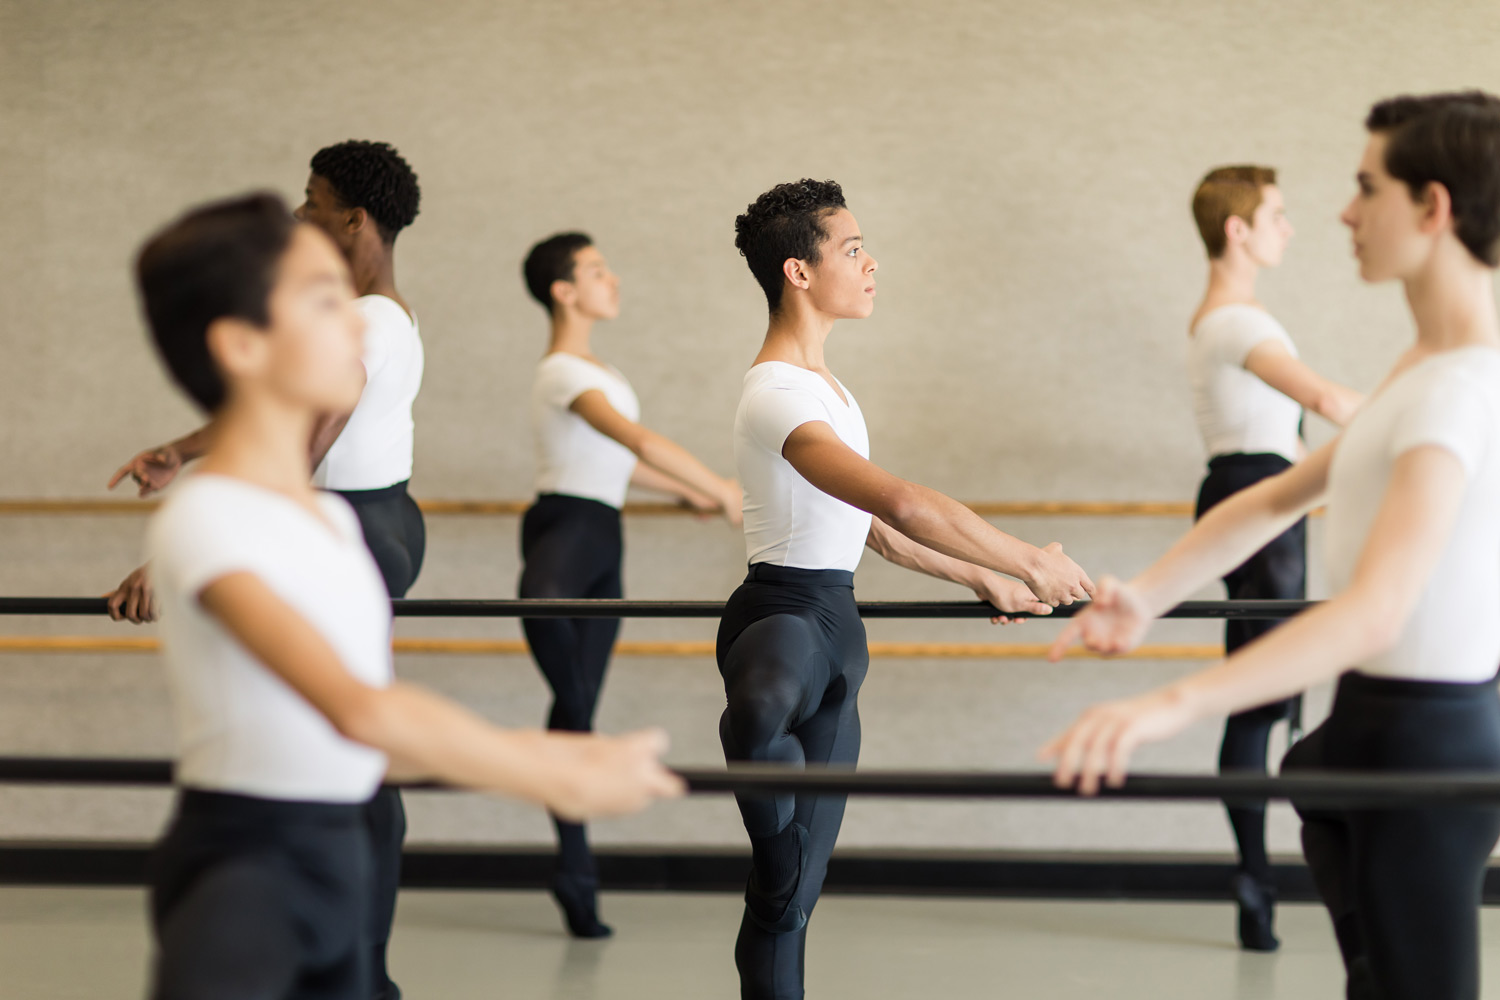 Pin by Lael Johnson on Dance - Ballet | Ballet dancers, Ballet poses, Ballet  dance photography